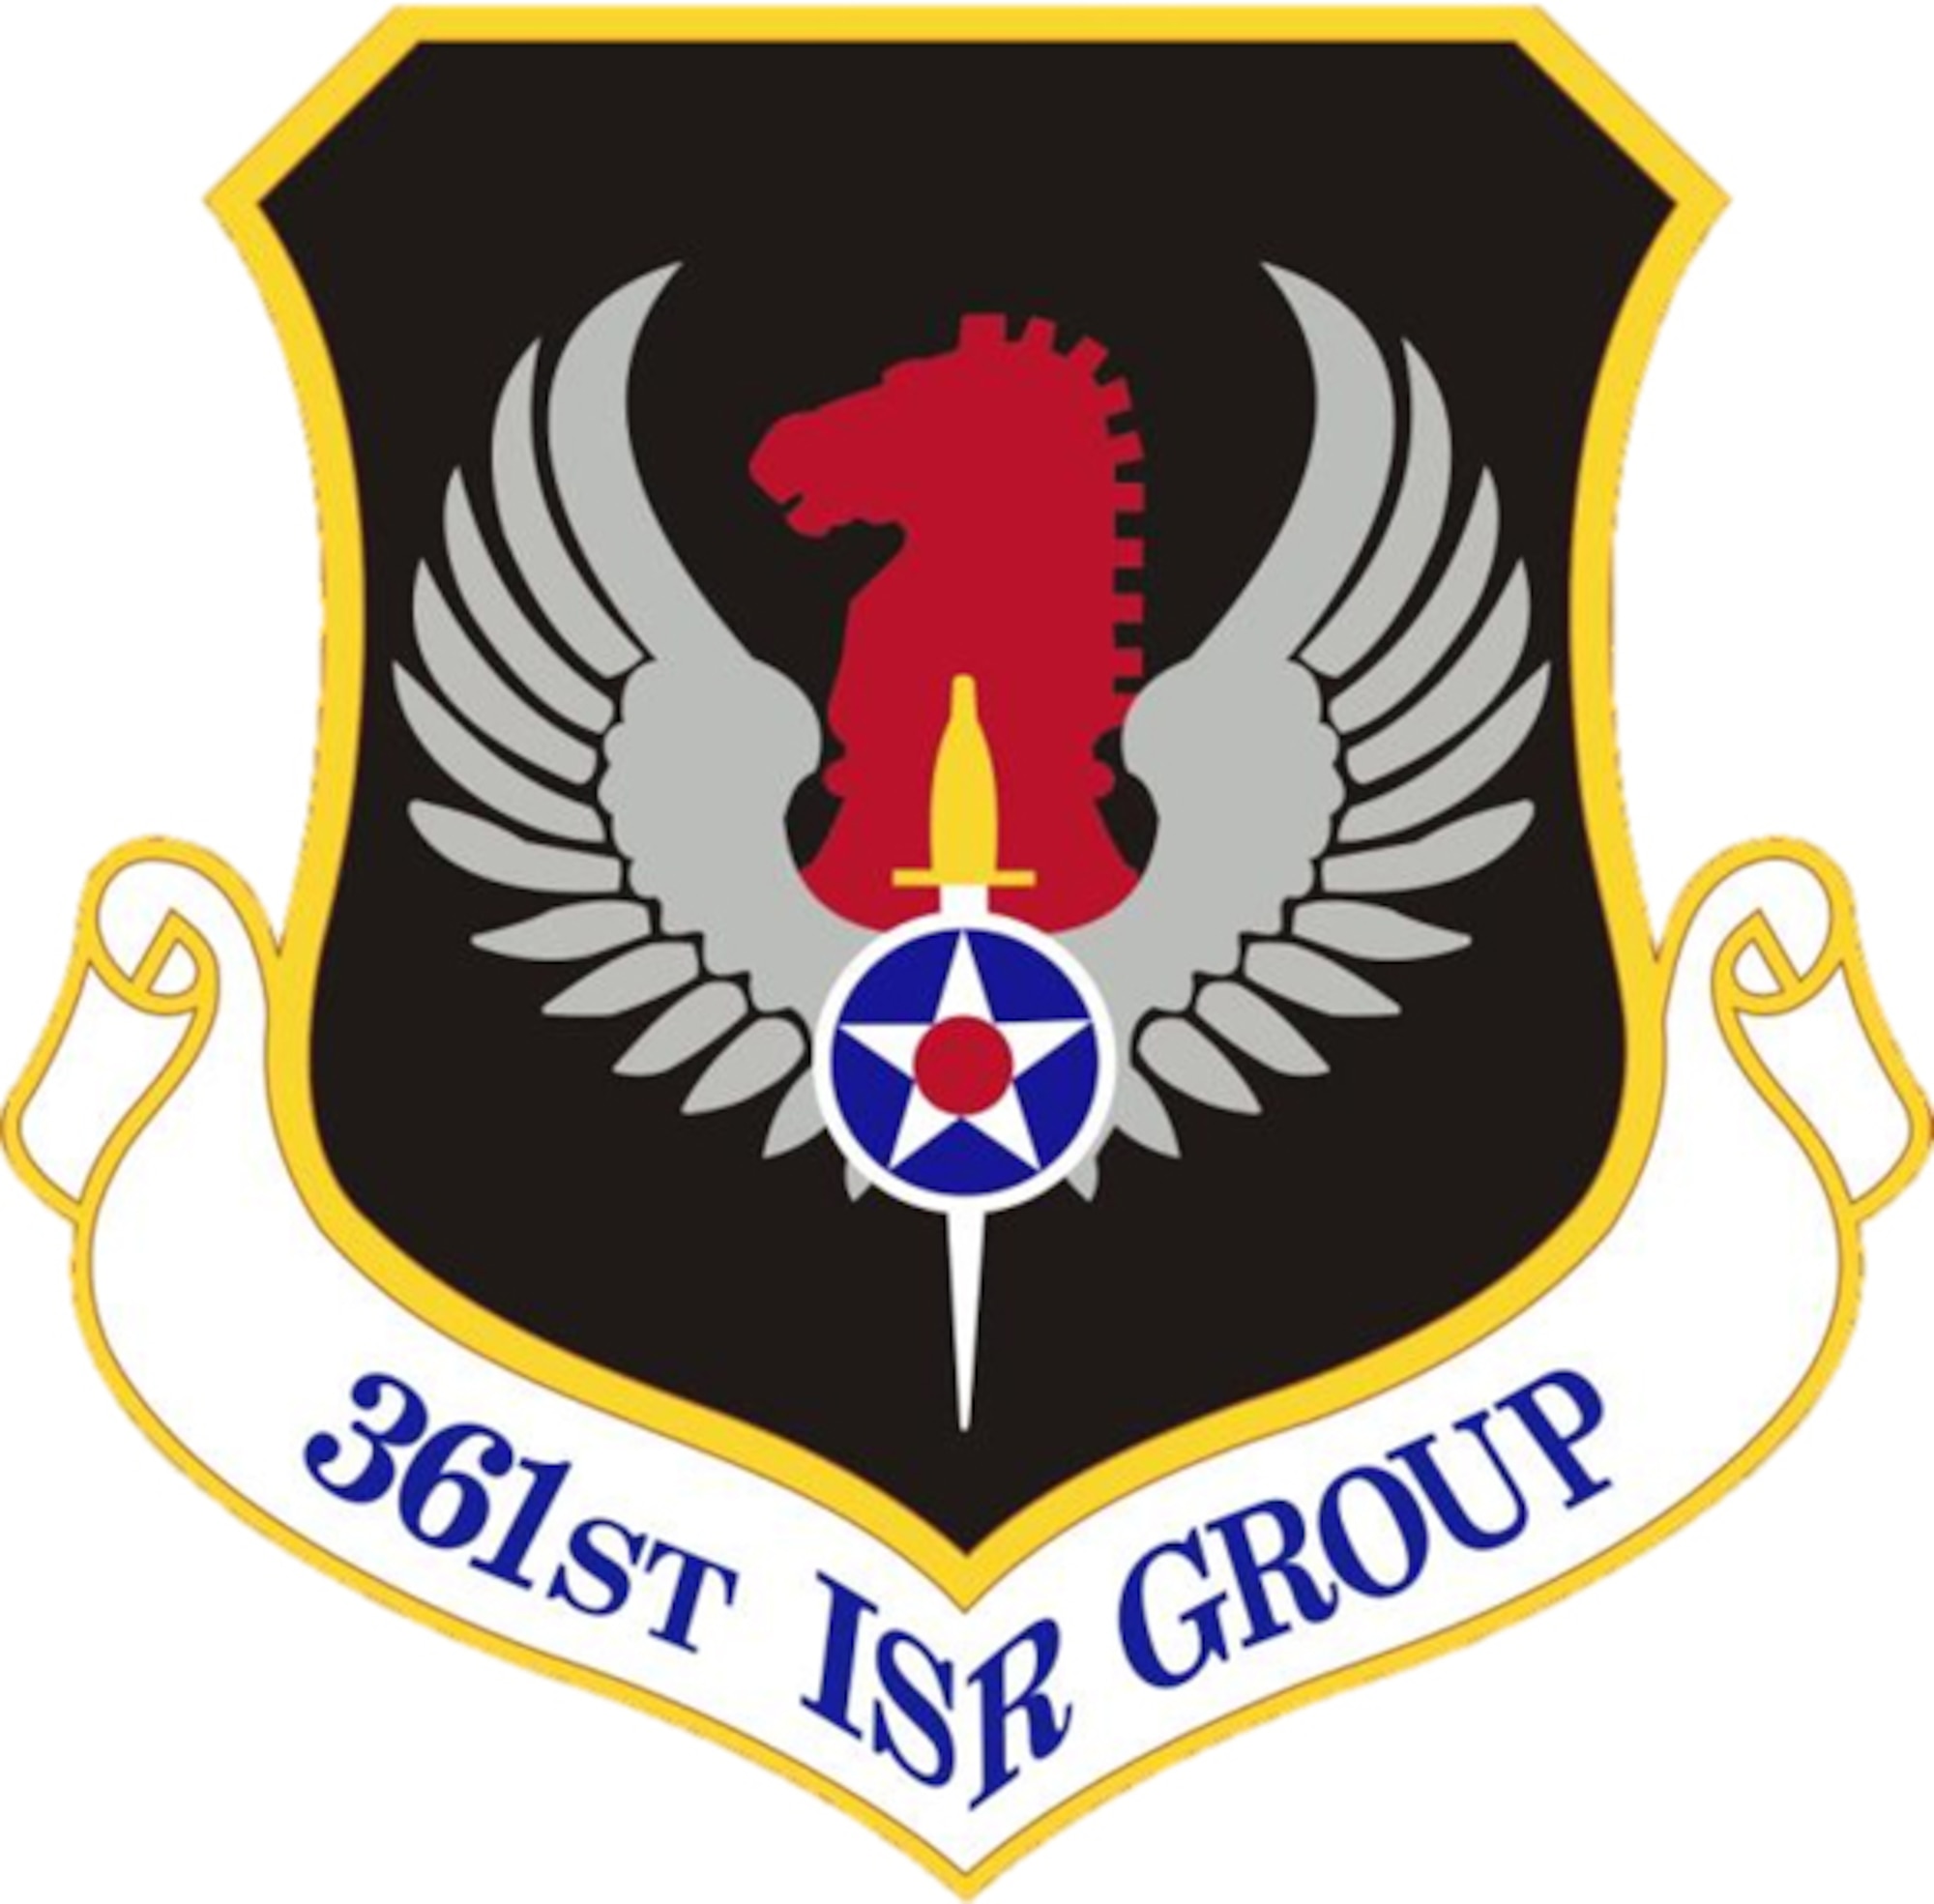 Emblem of the 361st Intelligence, Surveillance and Reconnaissance Group